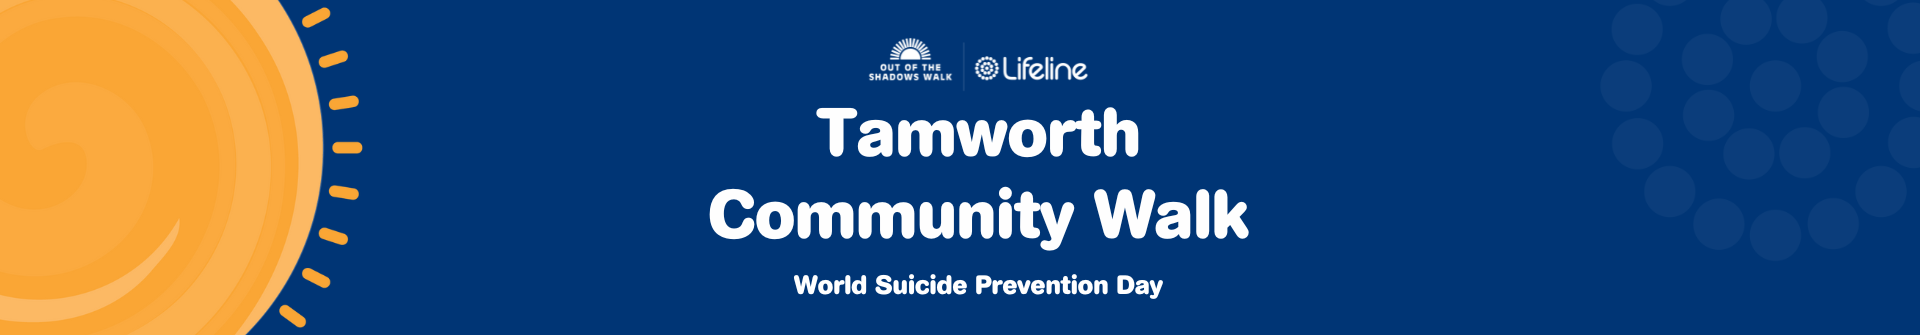 Community walk tamworth community